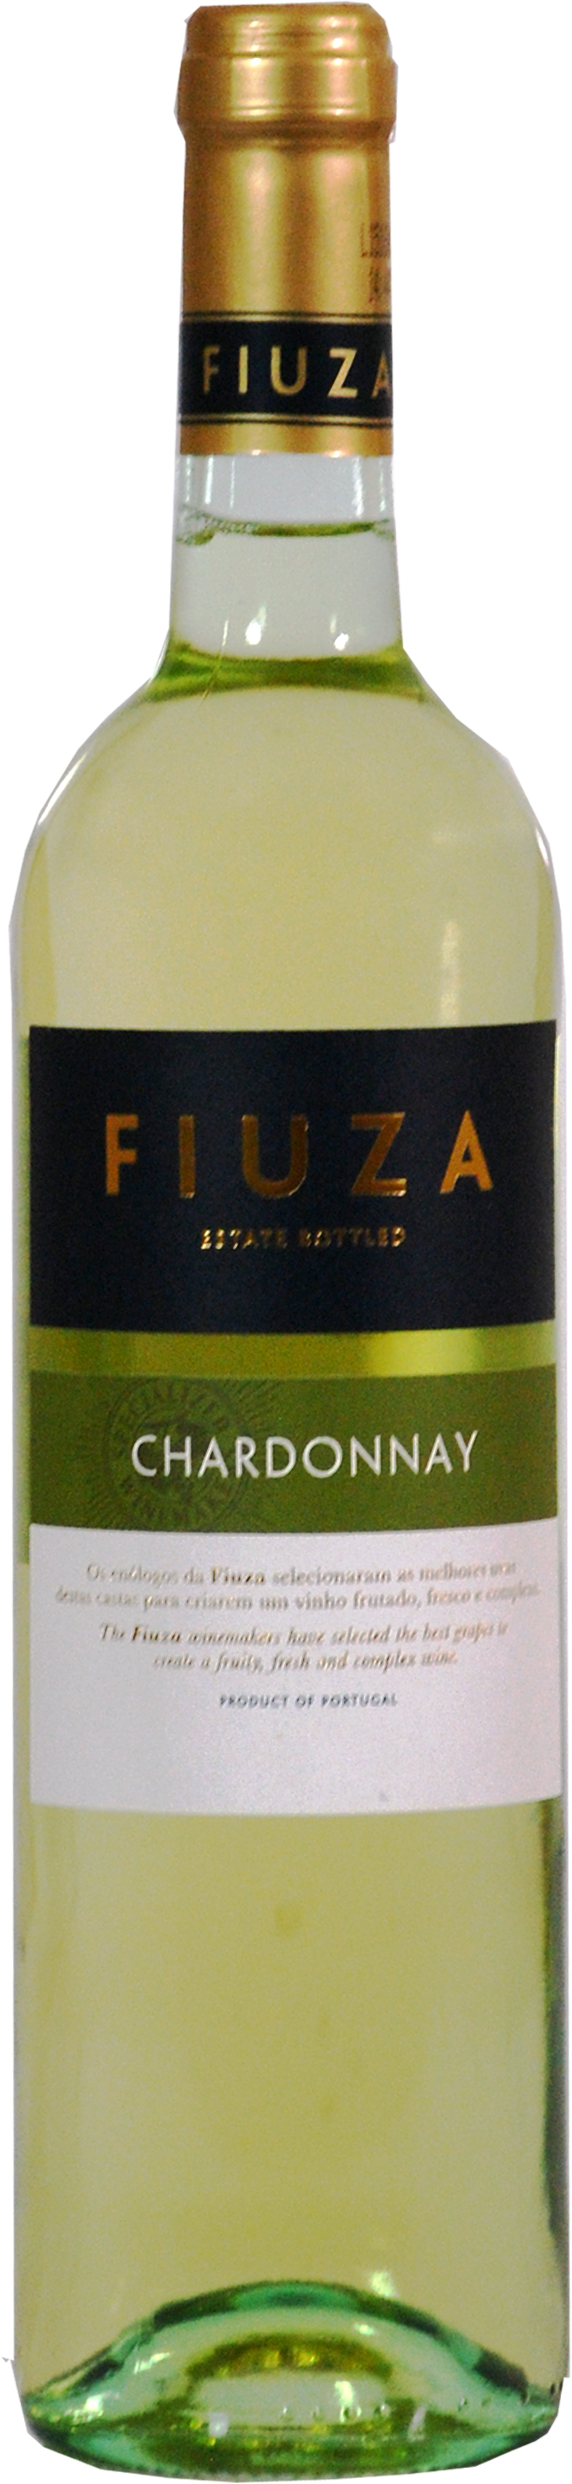 Fiuza Chardonnay 2015 - 0.75l